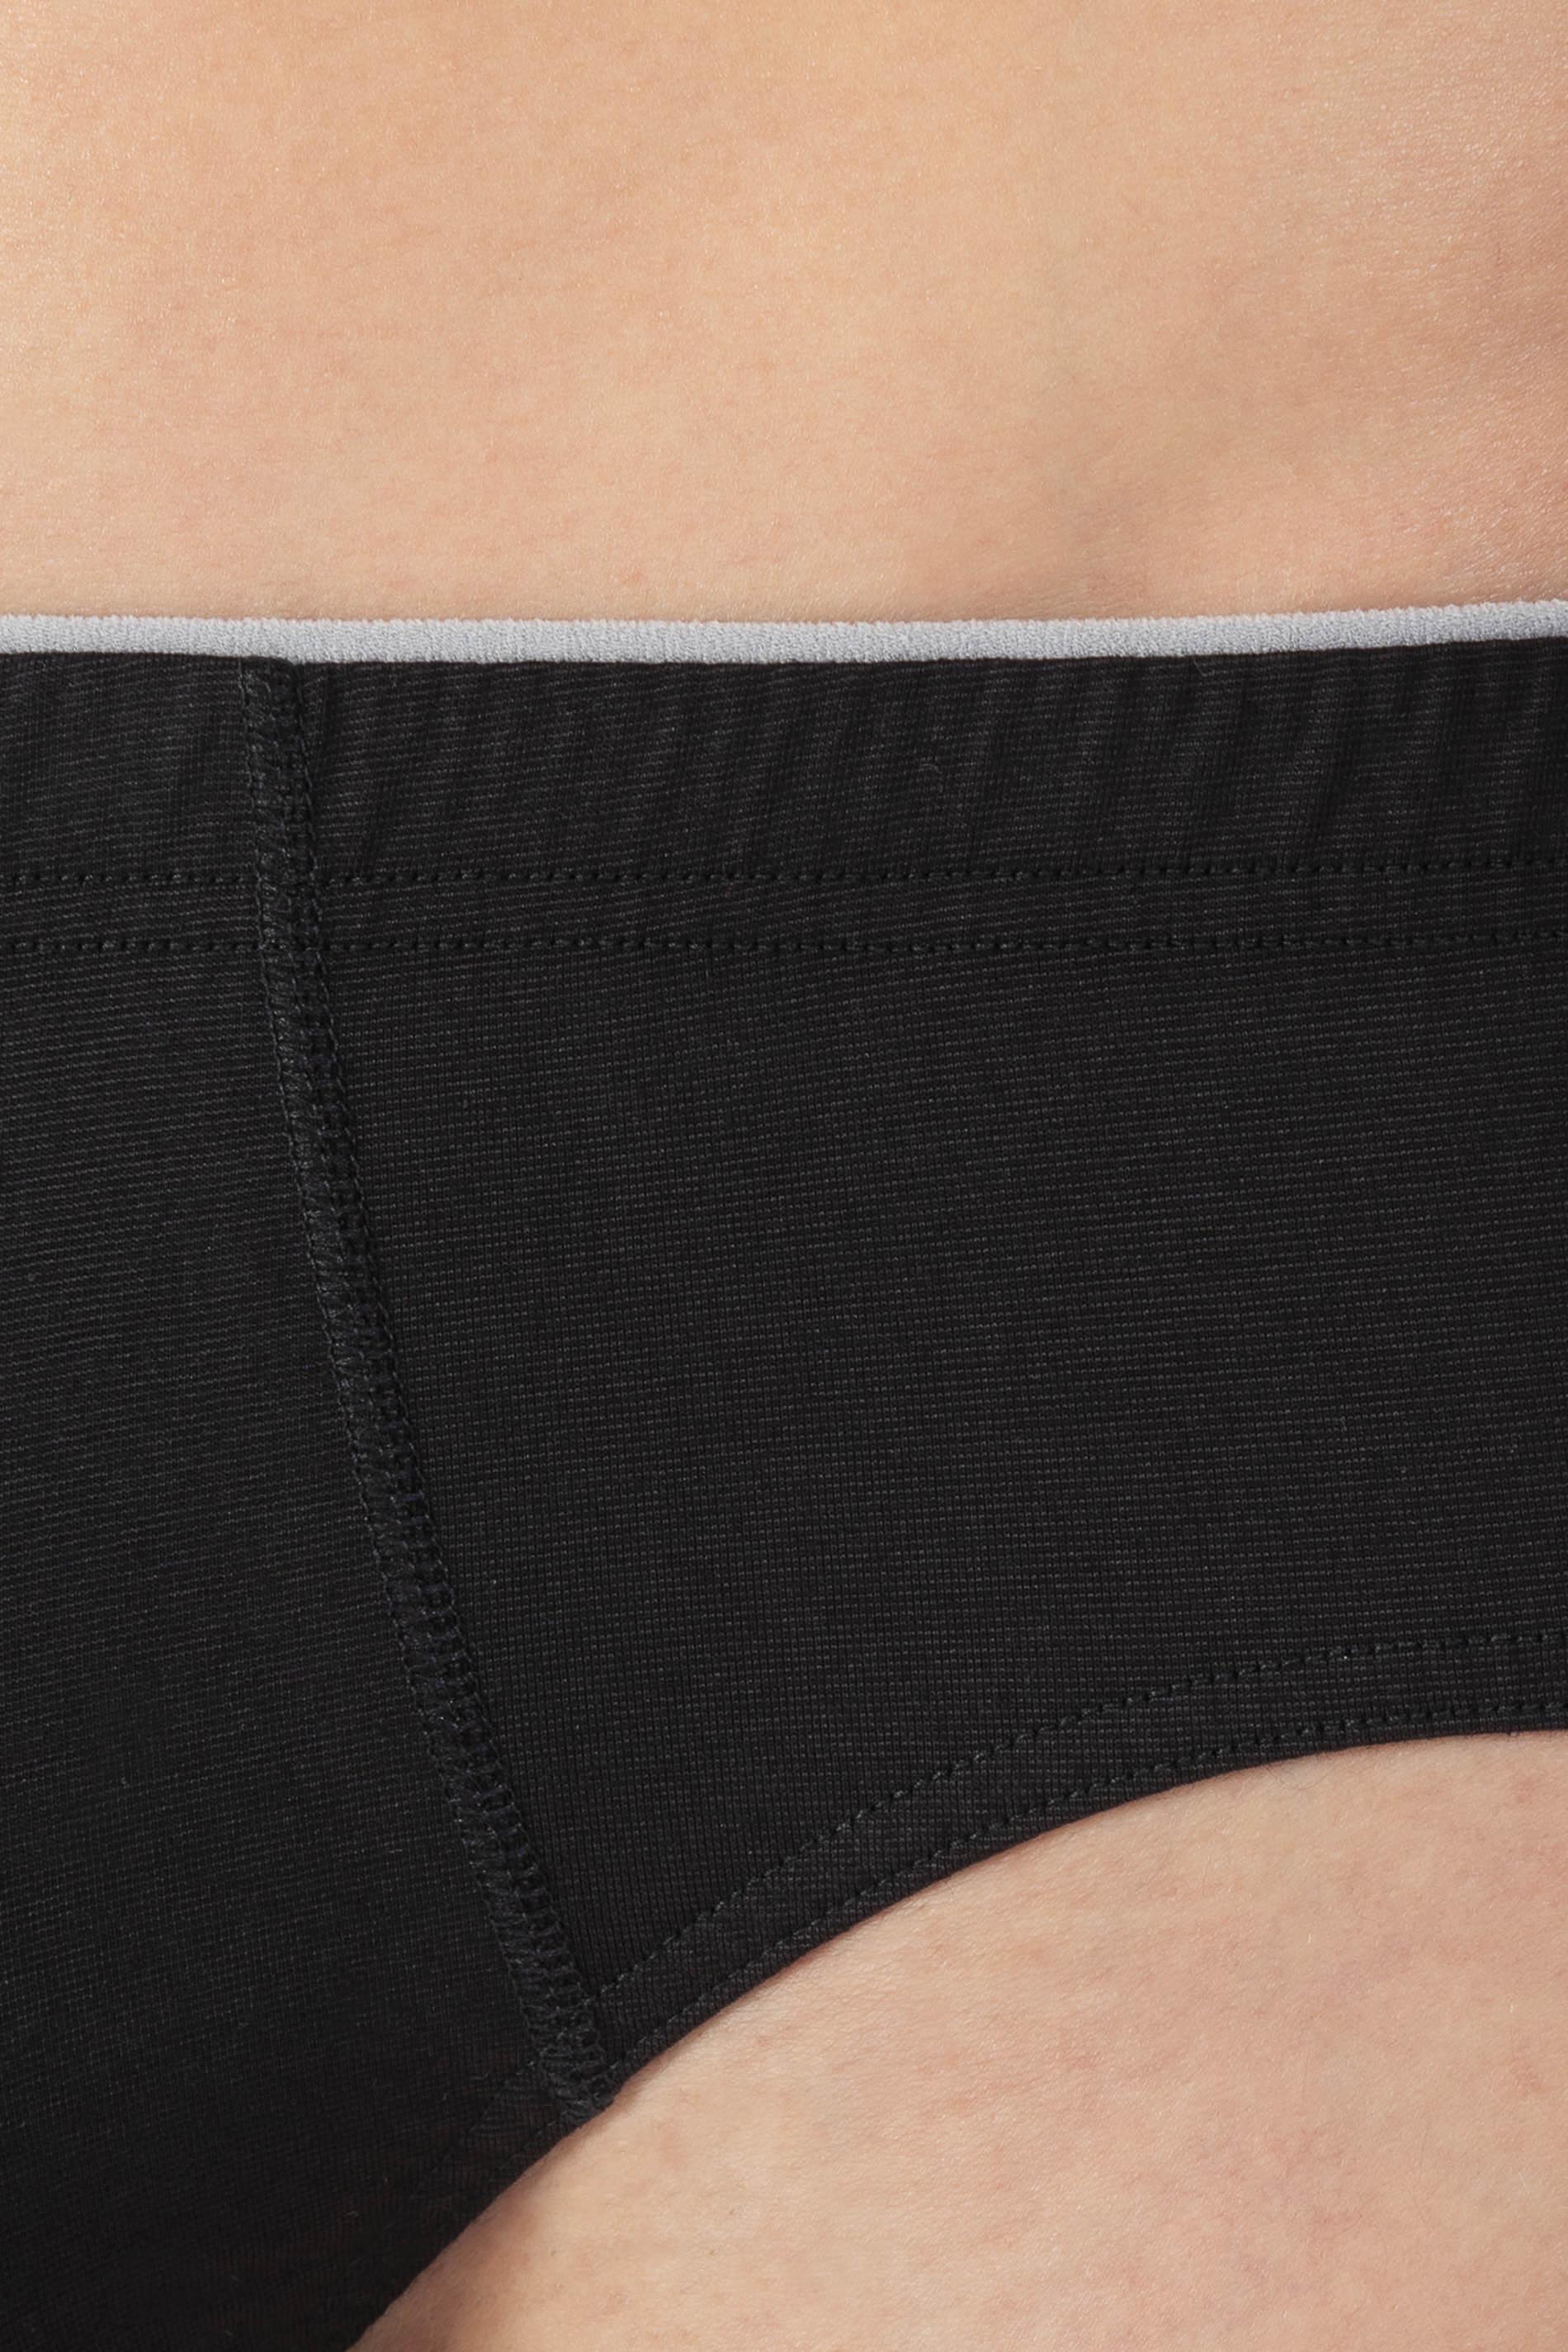 Jazz pants Black Serie Dry Cotton Detail View 01 | mey®